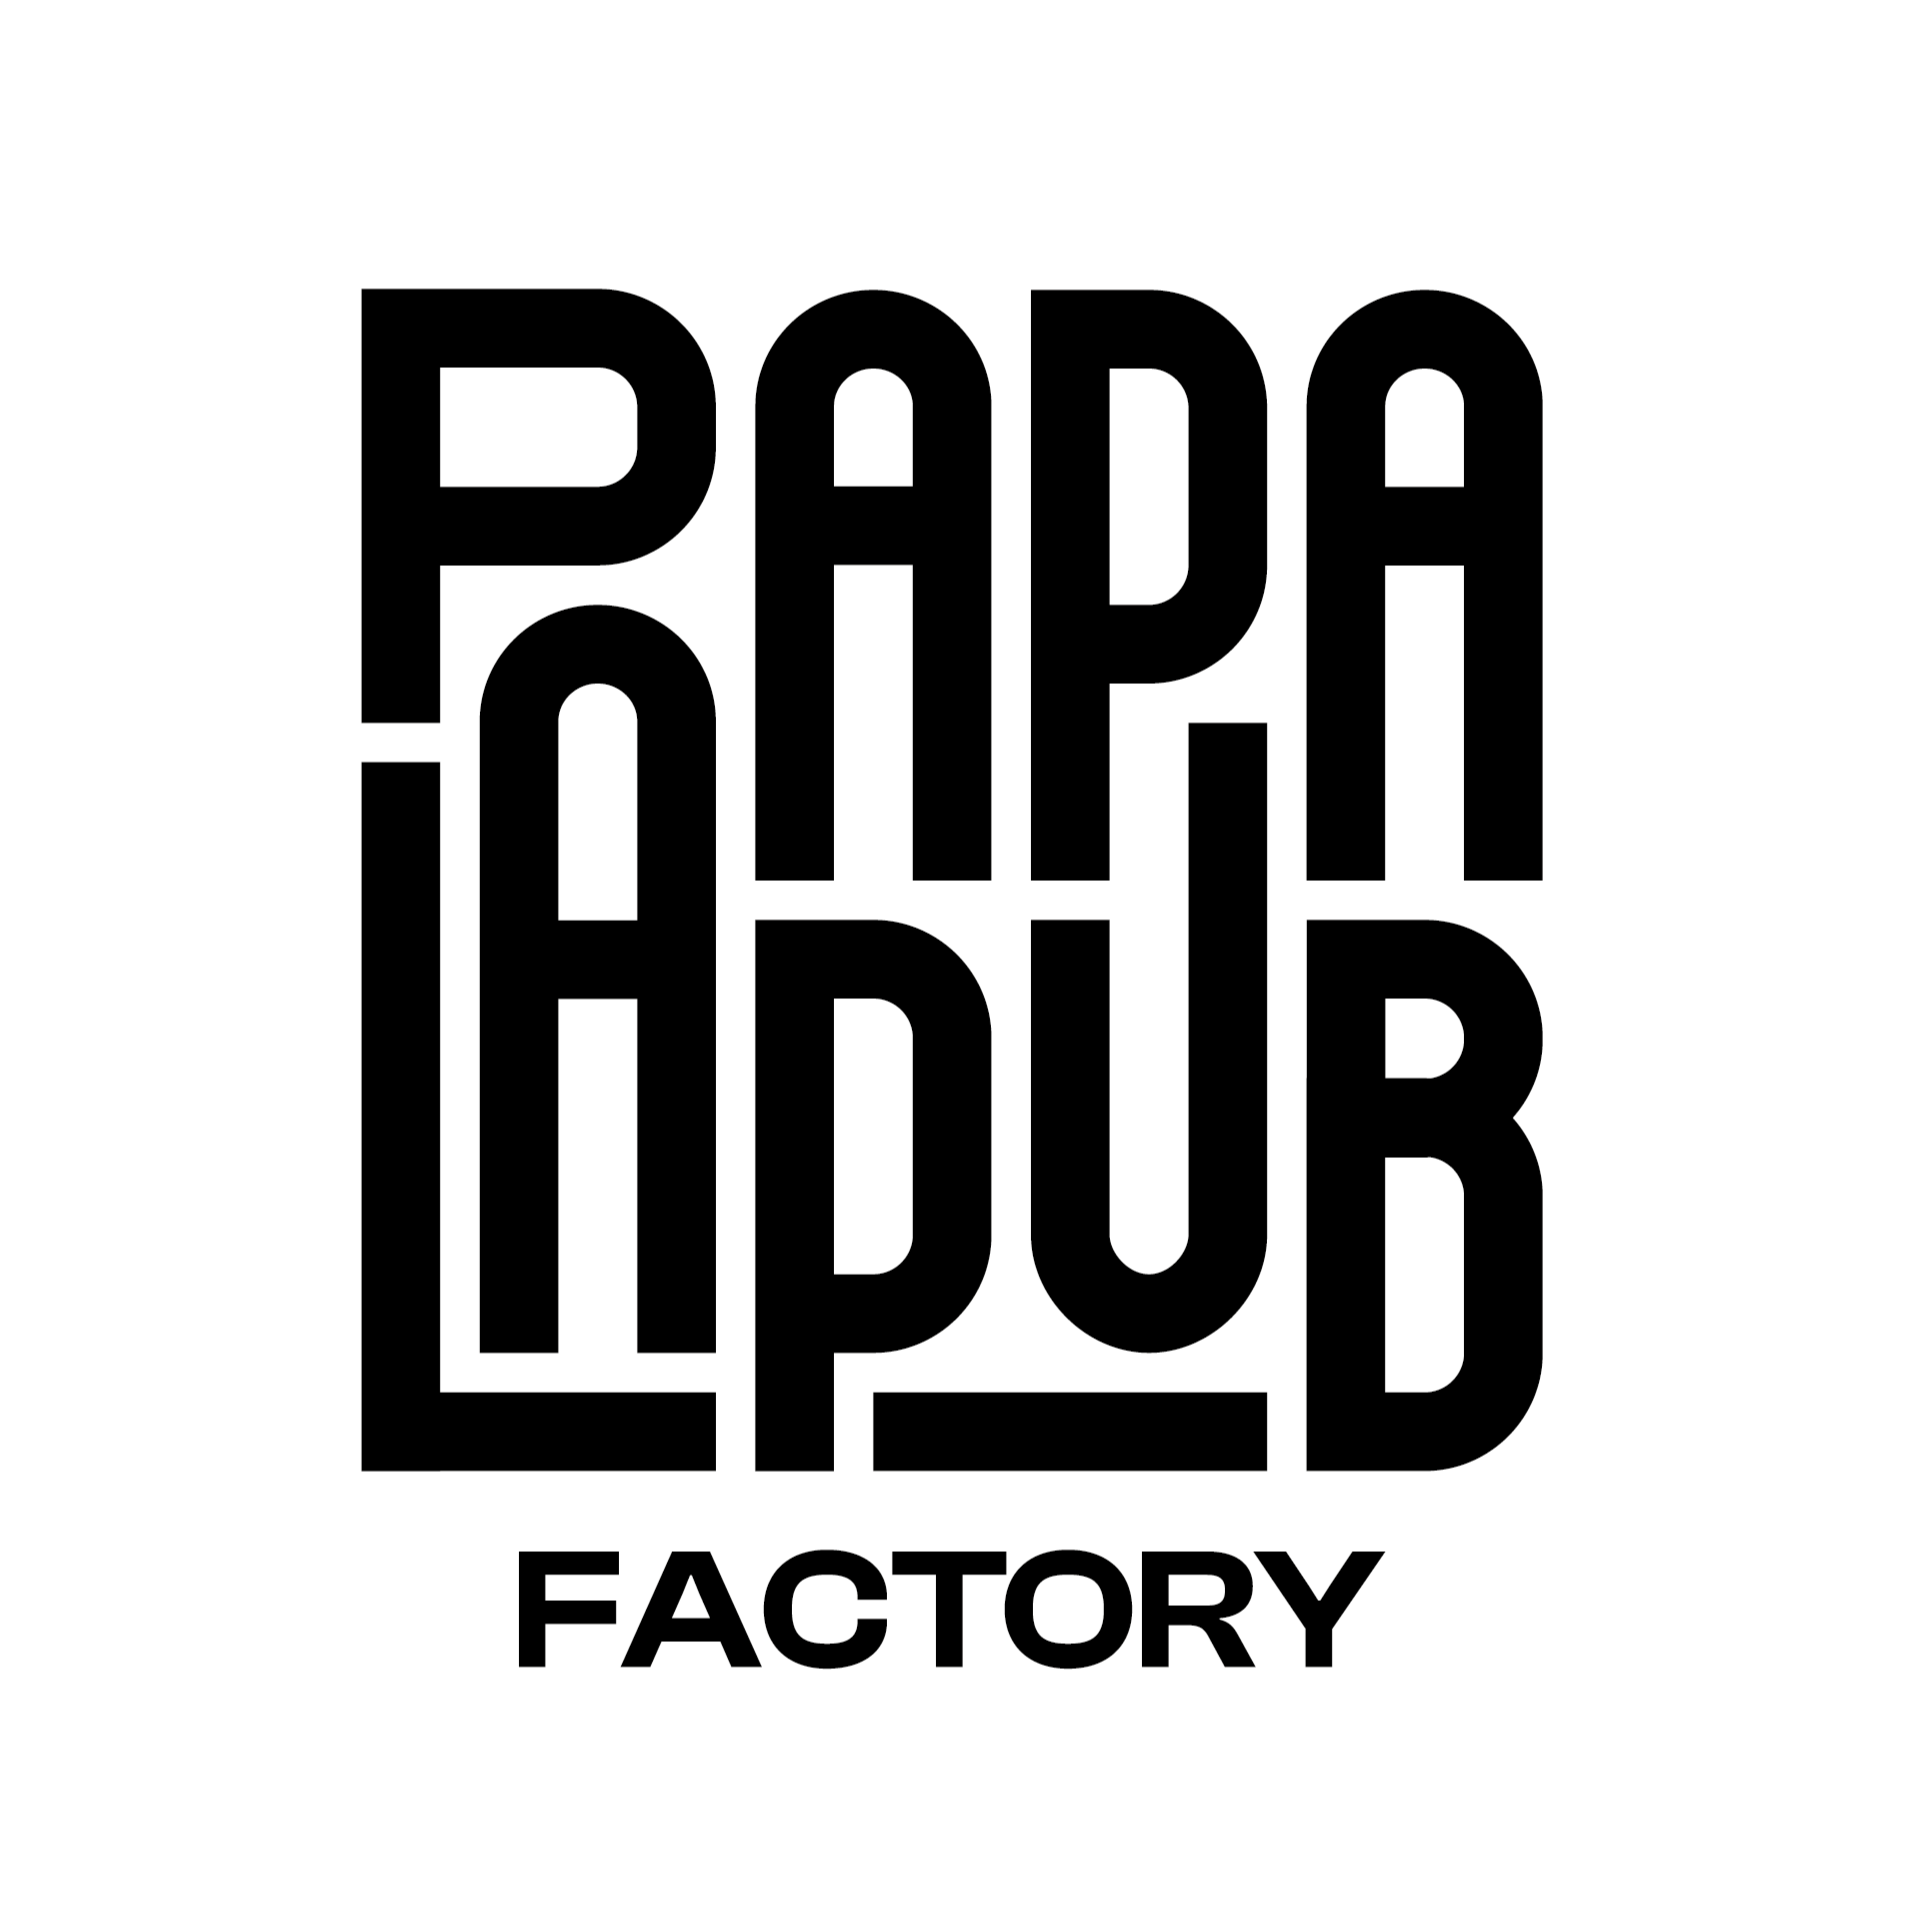 Kundenbild groß 1 PAPALAPUB Factory